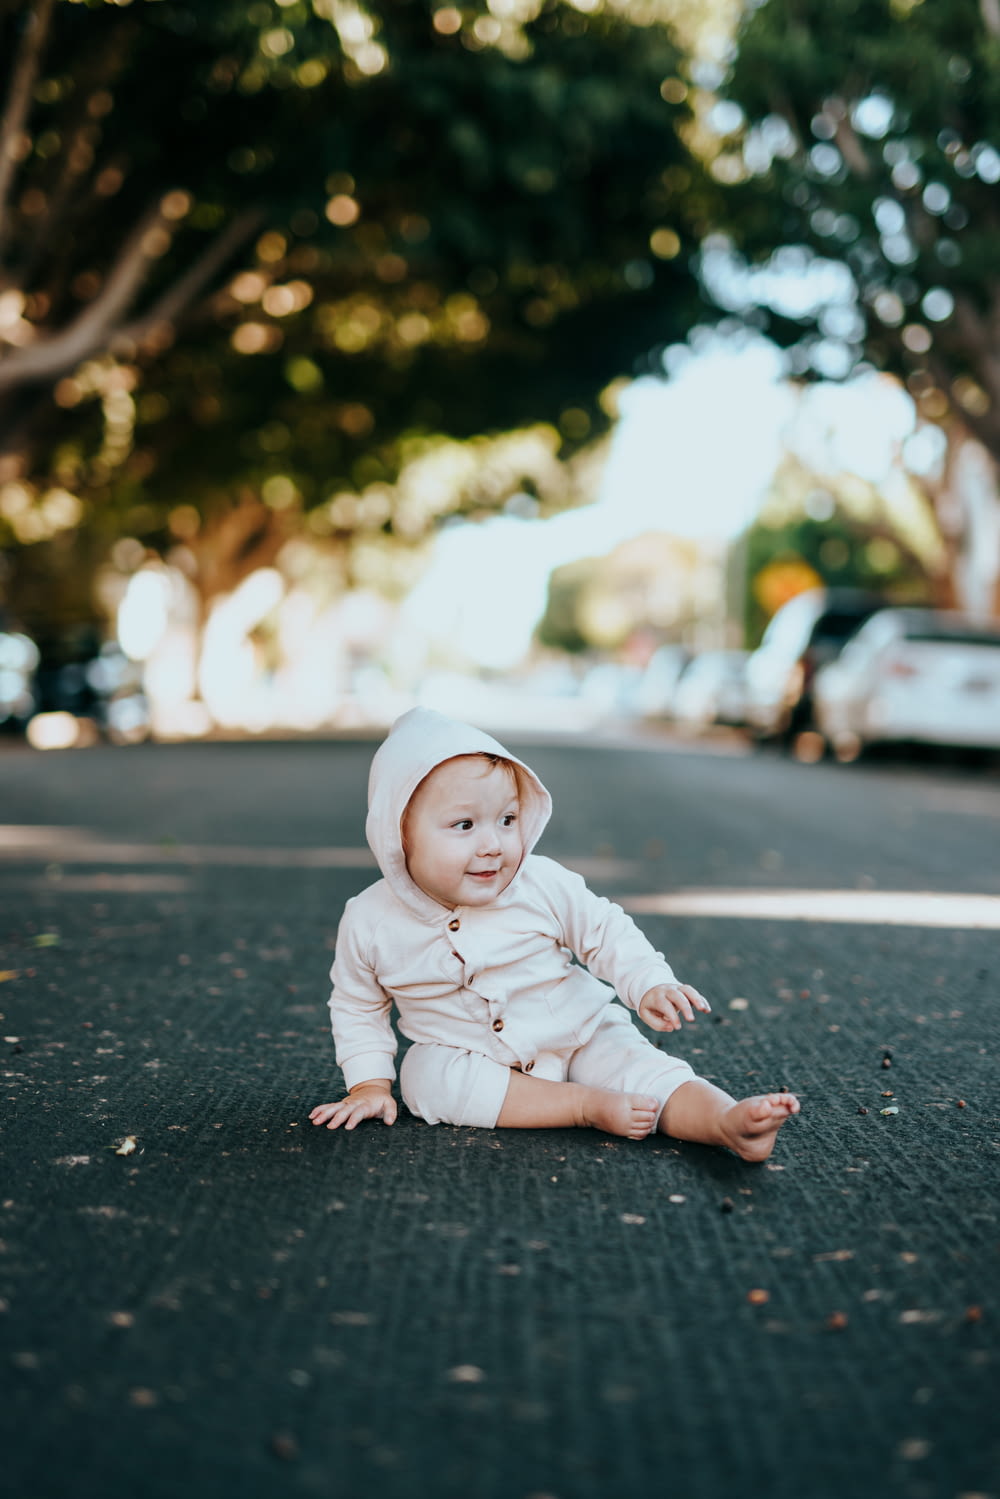 baby in white onesie sitting on black asphalt road during daytime